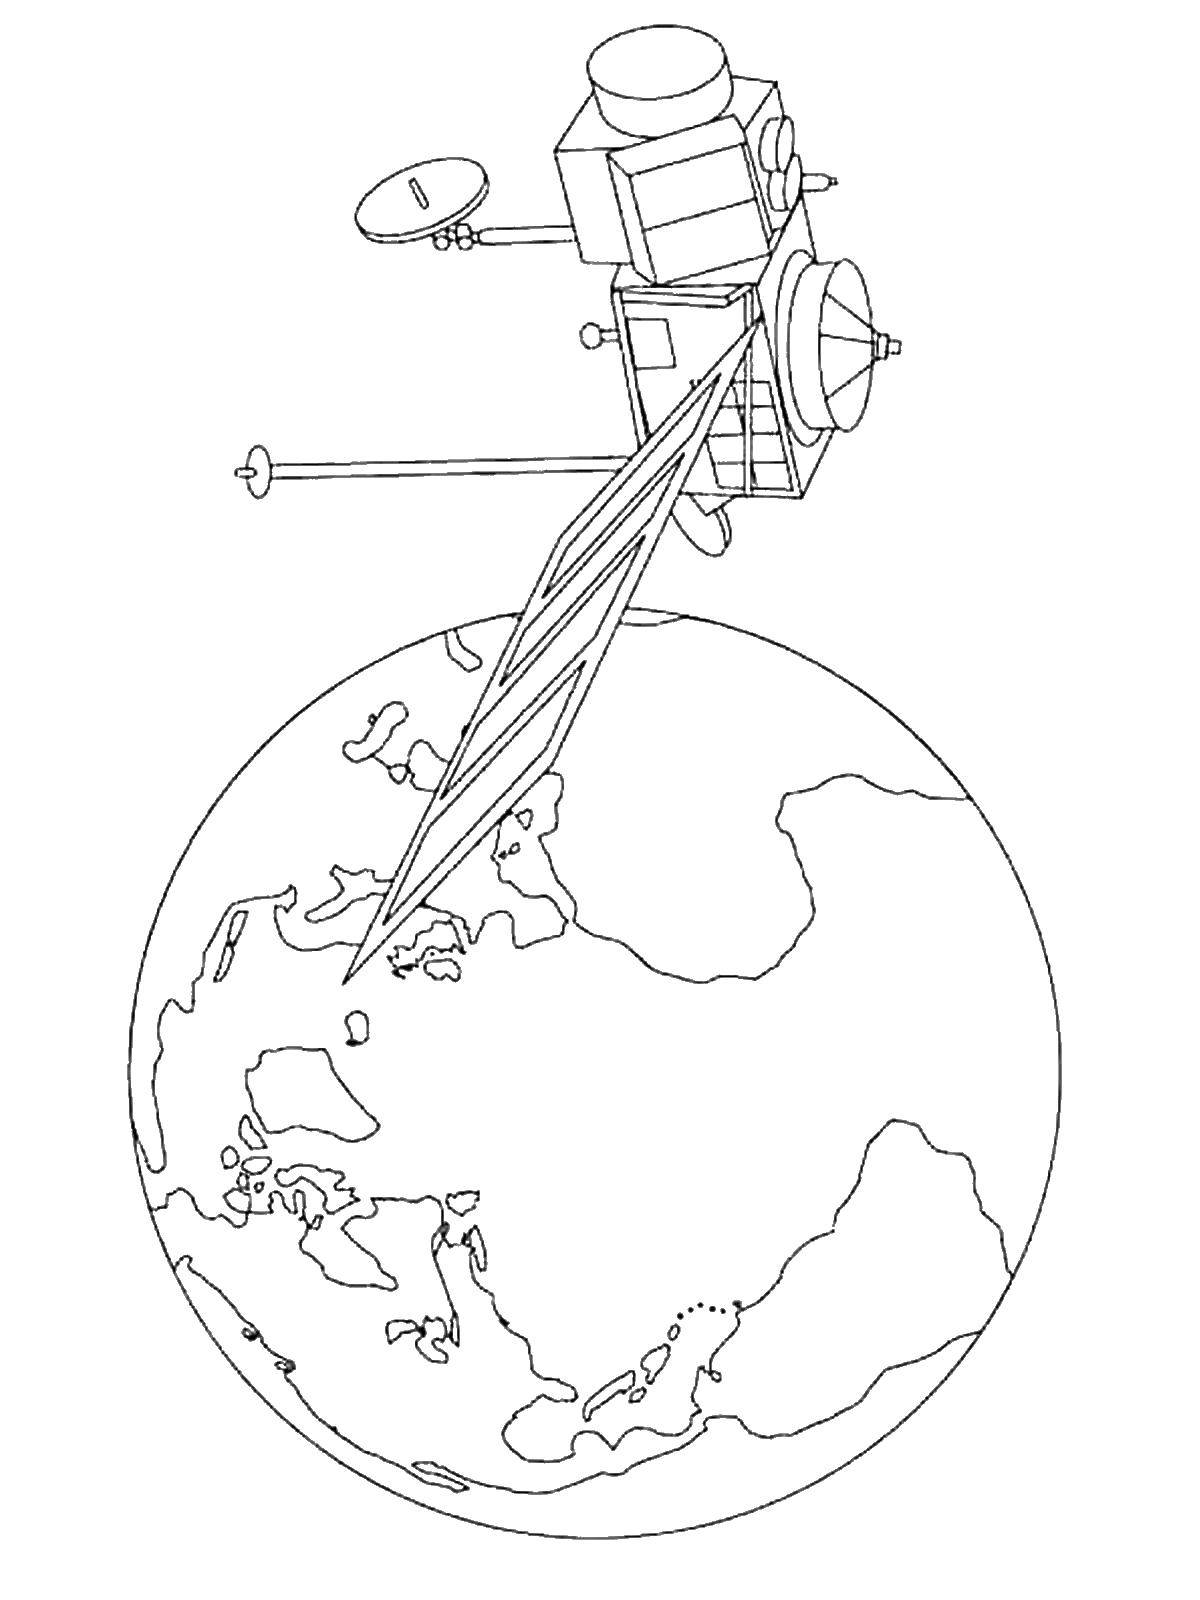 Опис: розмальовки  Земля і супутник. Категорія: День космонавтики. Теги:  - космос, планета, ракета, Гагарін, день космонавтики, супутник.